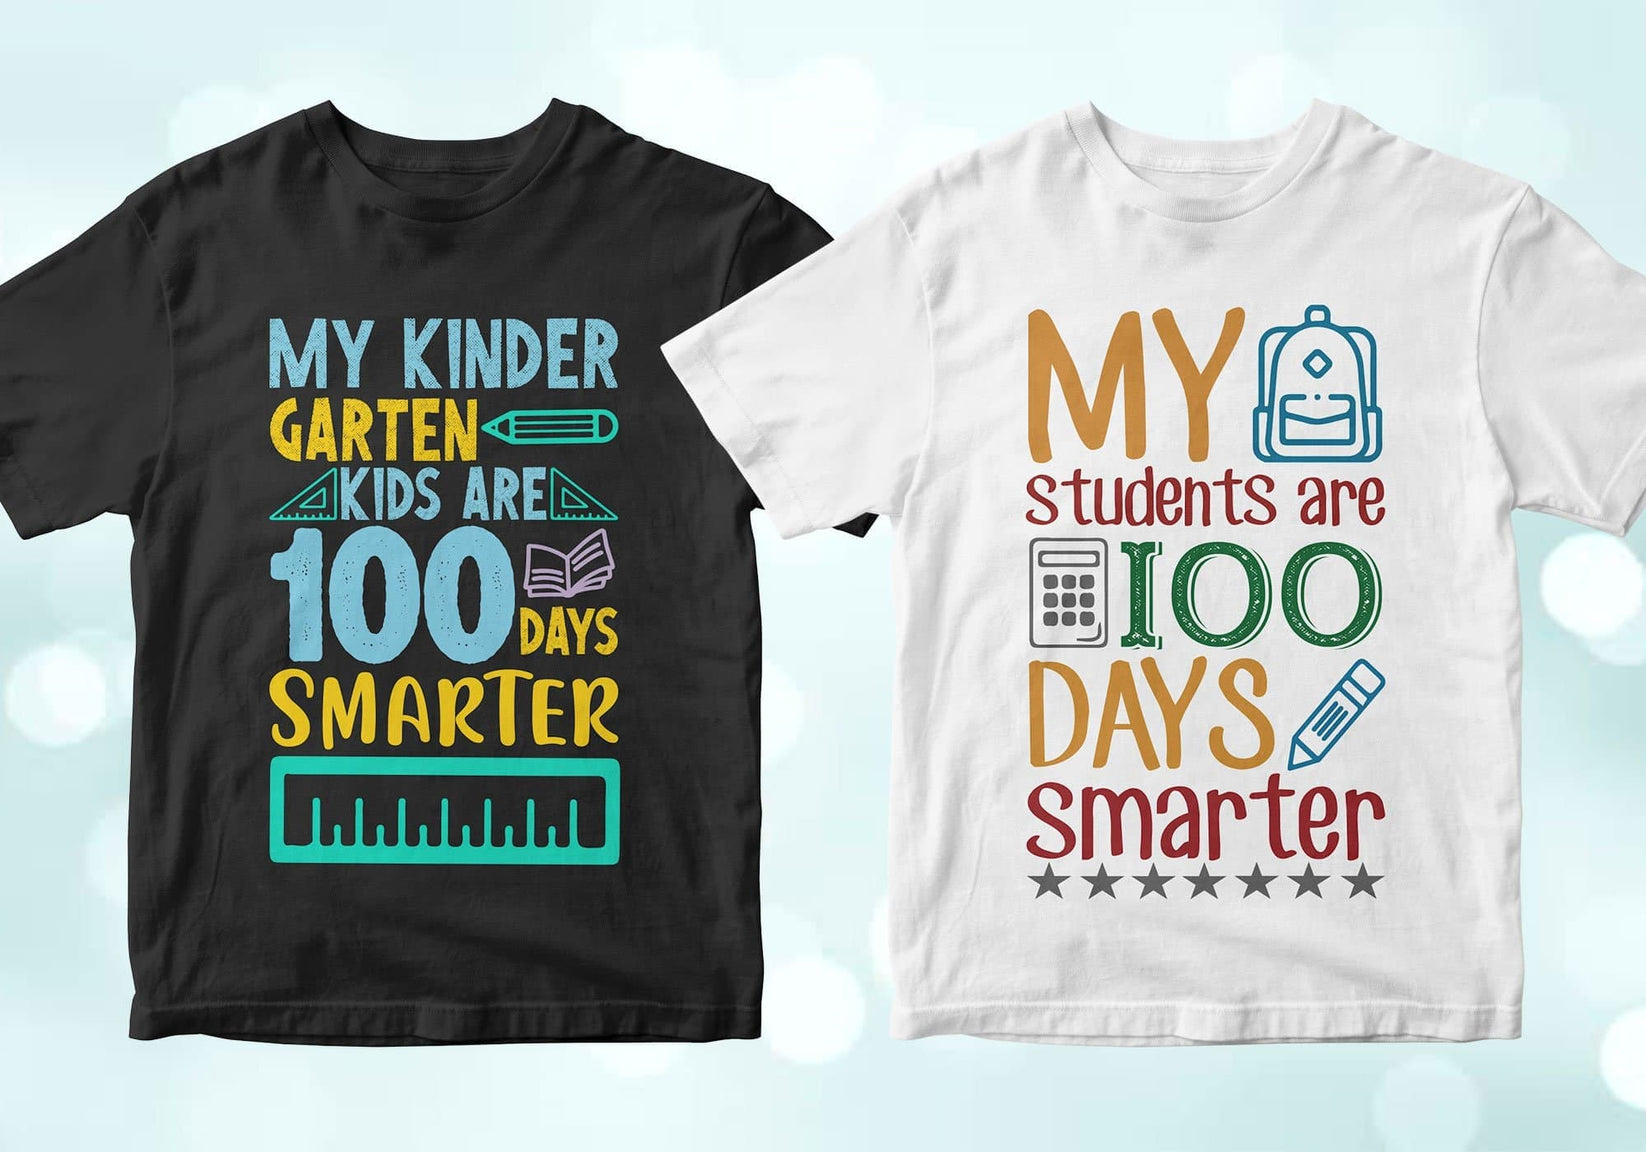 My kindergarten kids are 100 days smarter, my students are 100 days smarter